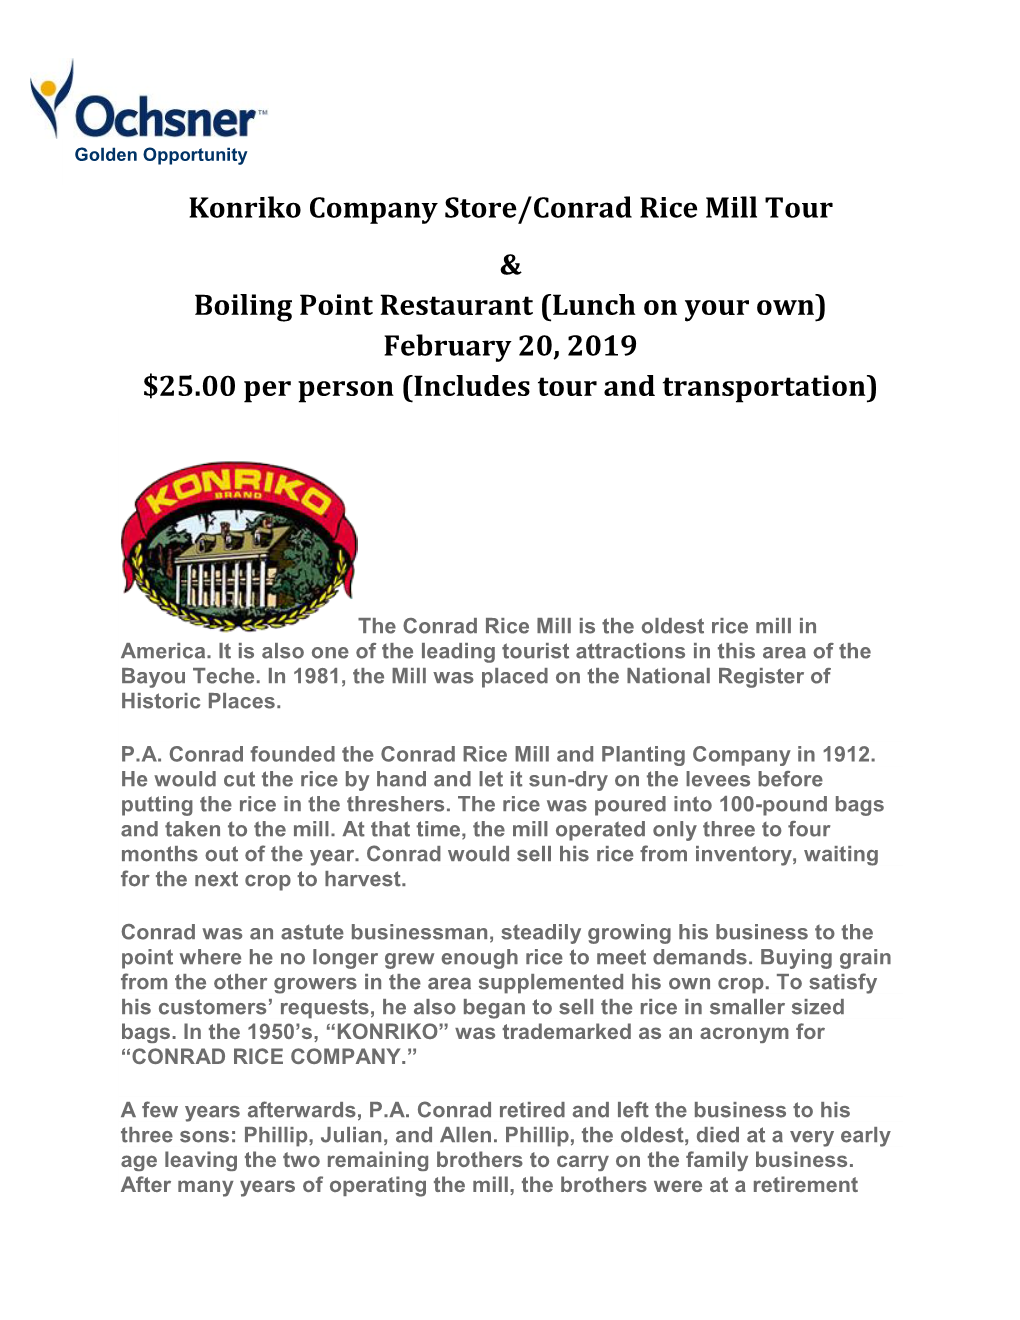 Konriko Company Store/Conrad Rice Mill Tour & Boiling Point